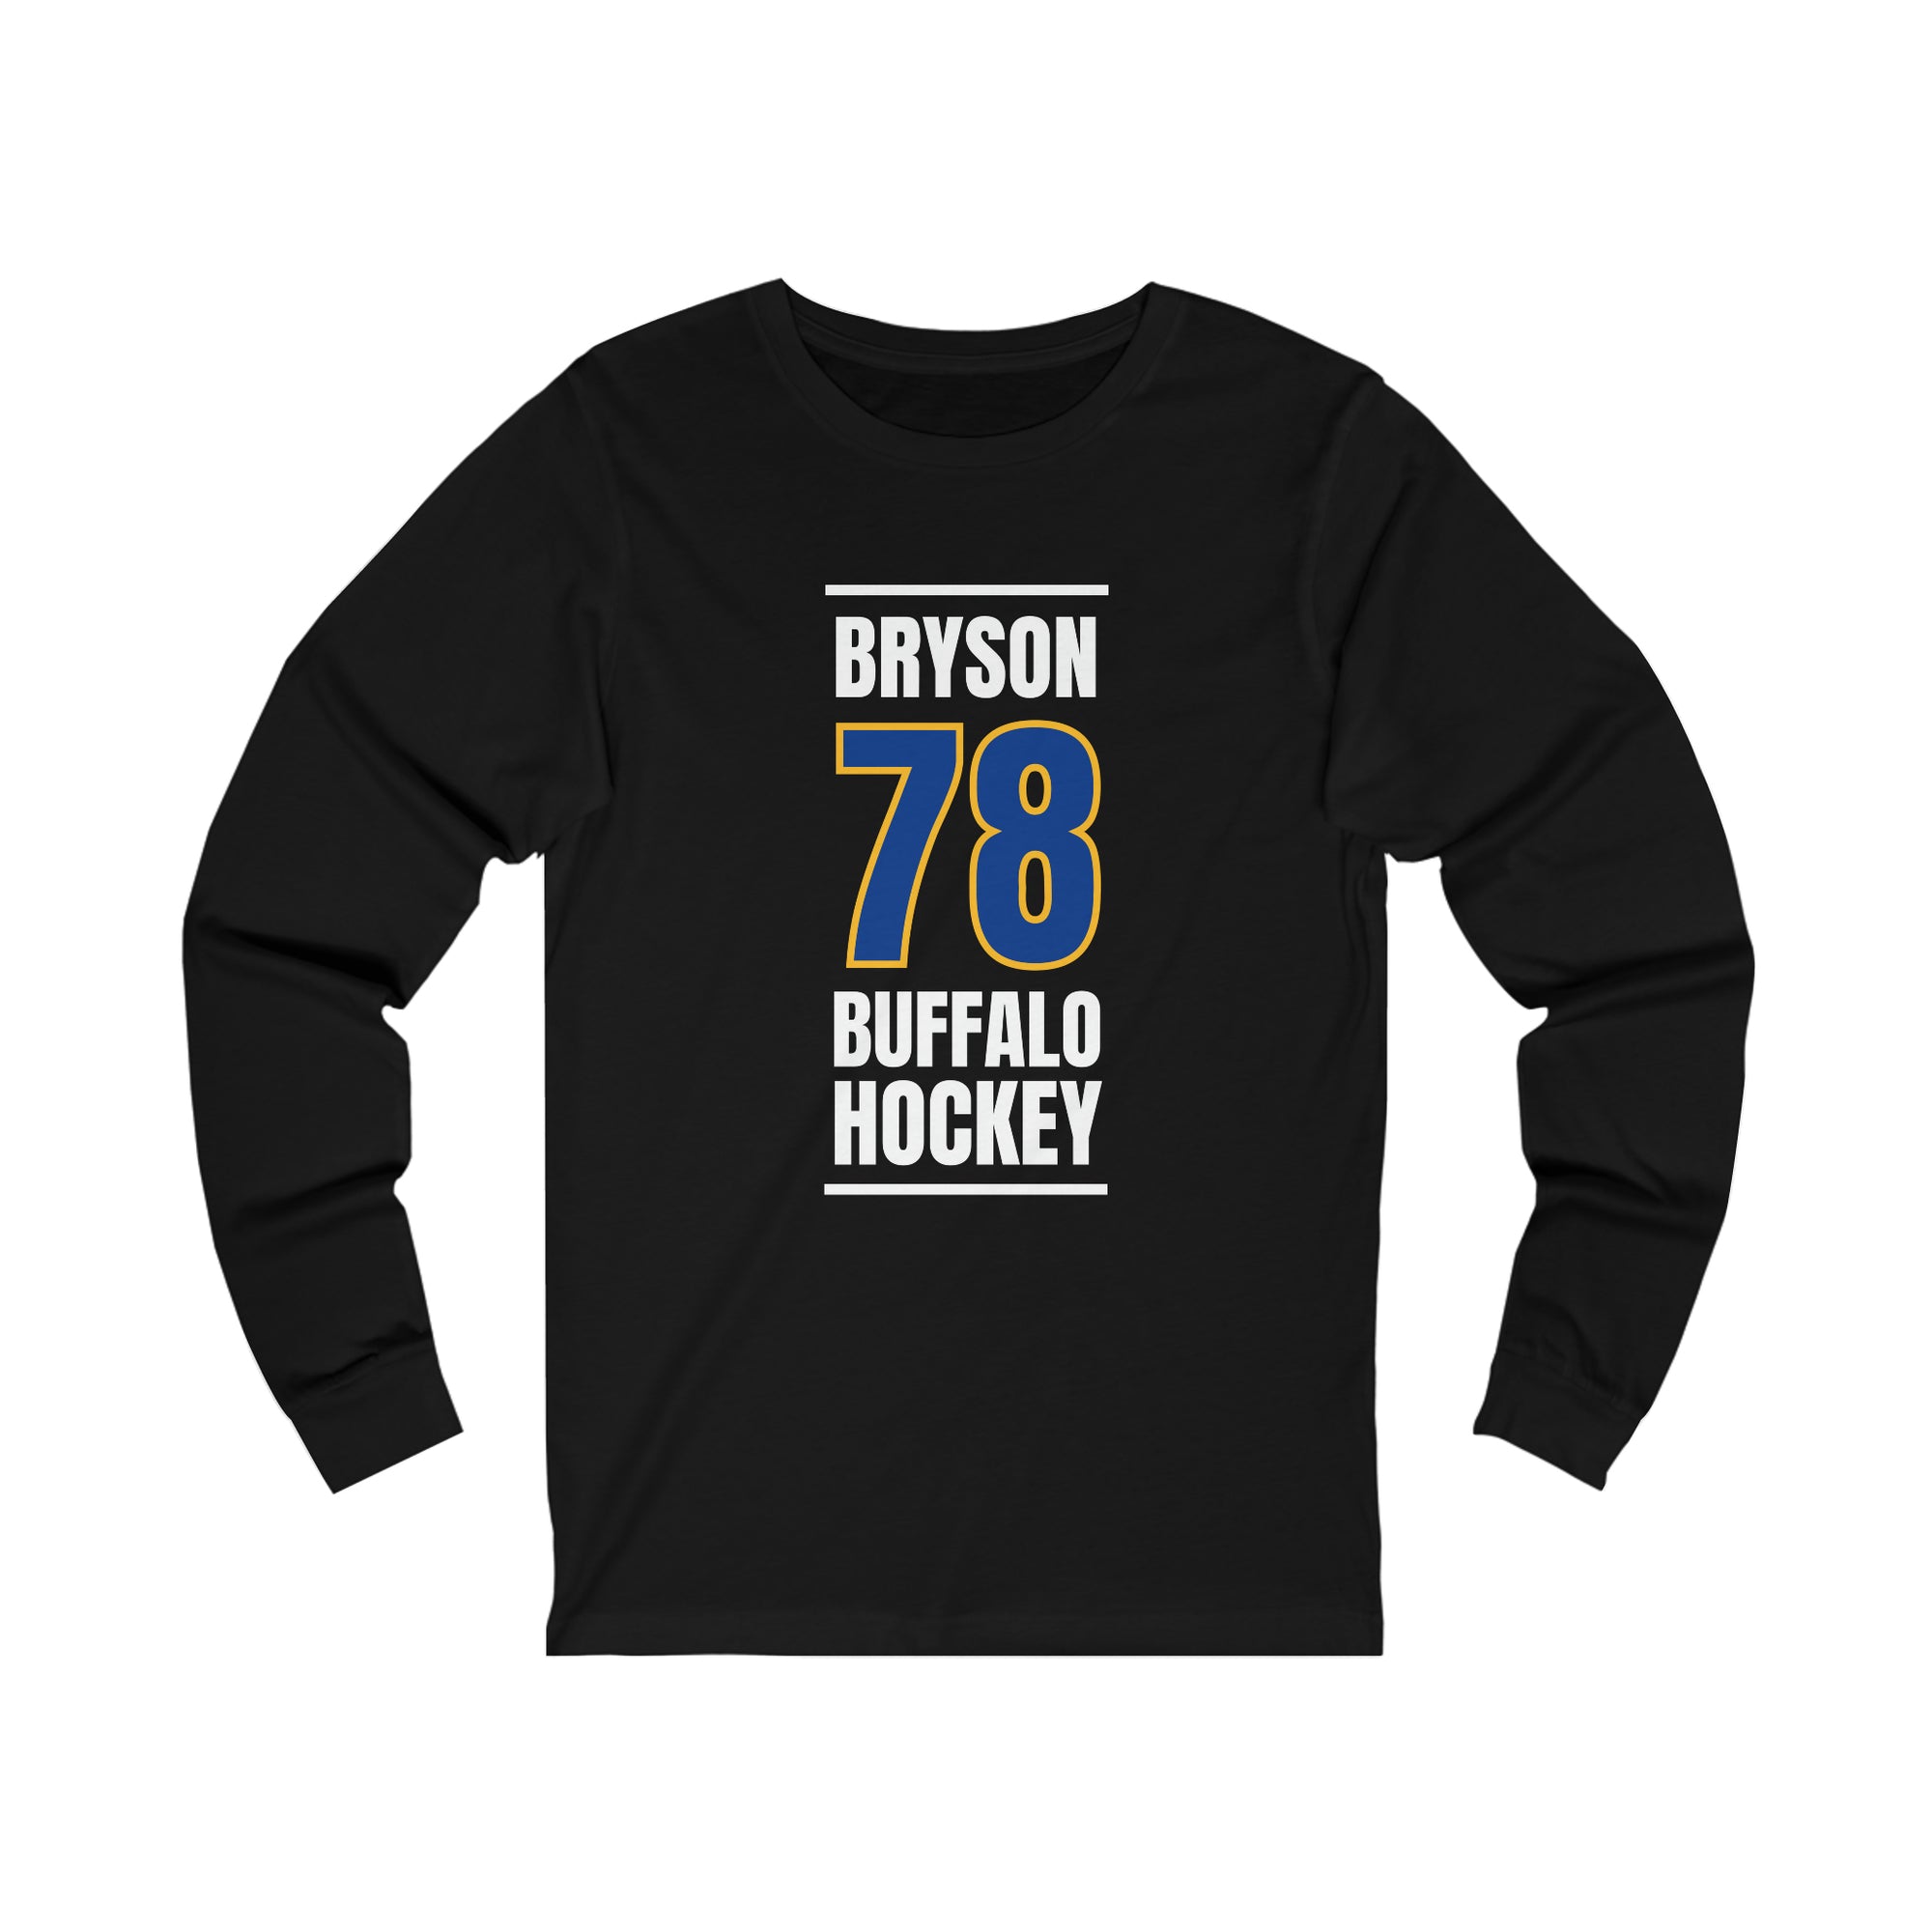 Bryson 78 Buffalo Hockey Royal Blue Vertical Design Unisex Jersey Long Sleeve Shirt